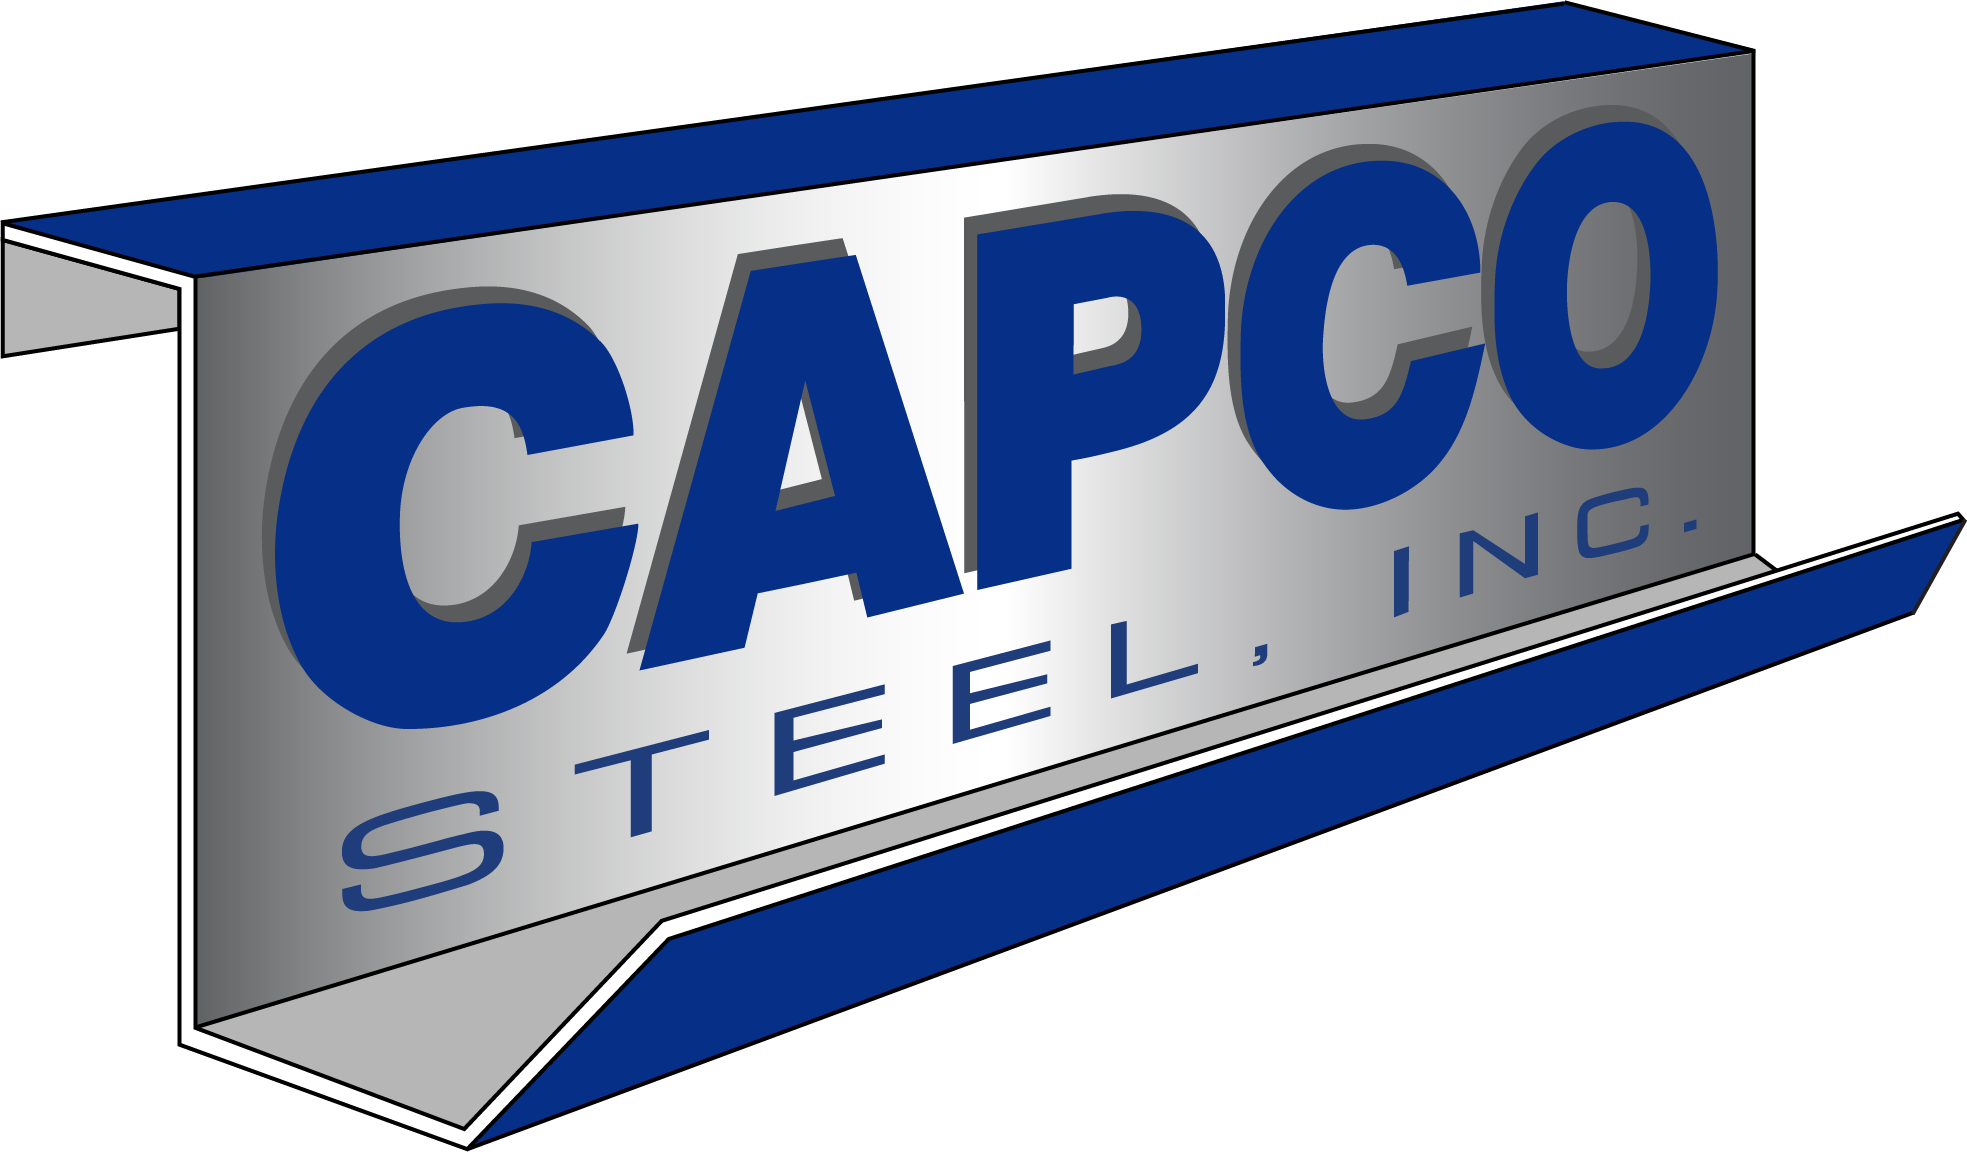 Capco Steel, Inc.